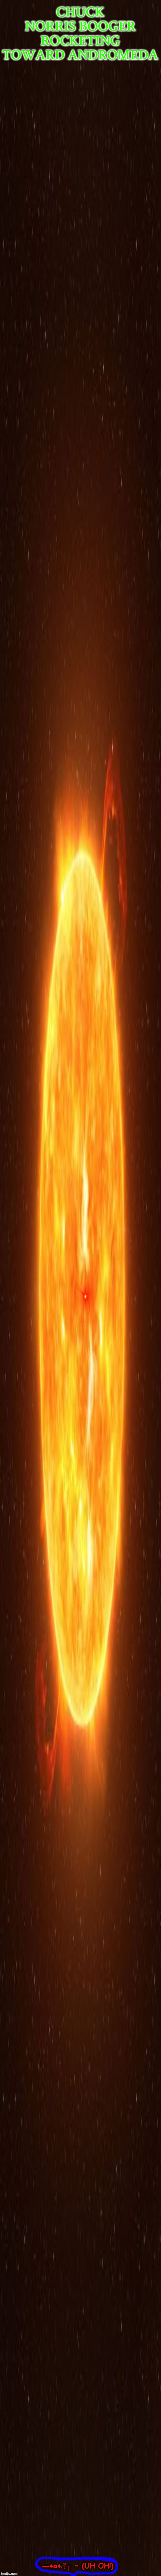 Gravitational Waves | CHUCK NORRIS BOOGER ROCKETING TOWARD ANDROMEDA; ▬♠◘♦♂┌ = (UH OH!) | image tagged in gravitational waves | made w/ Imgflip meme maker